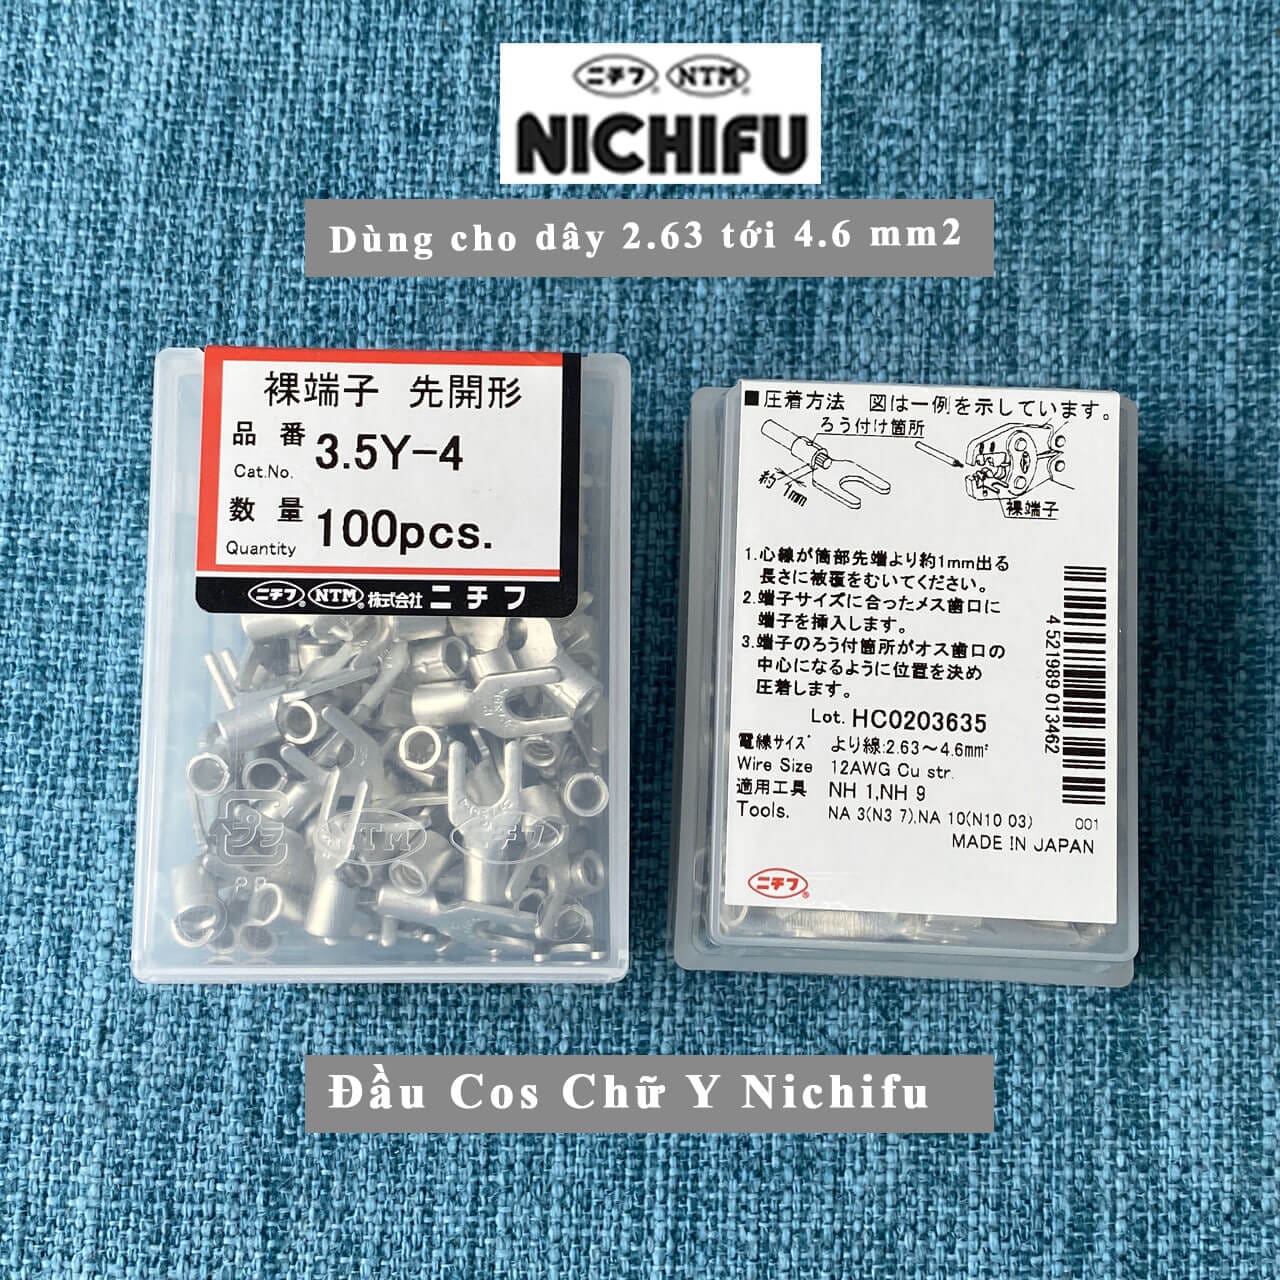 đầu cos nichifu 2y-3.5; đầu cosse nichifu 3.5y-4; đầu cốt nichifu 3.5y-4; đầu cos 3.5y-4 nichifu; đầu cos chỉa nichifu 3.5y-4; mua cos 3.5y-4 nichifu; mua cốt 3.5y-4;